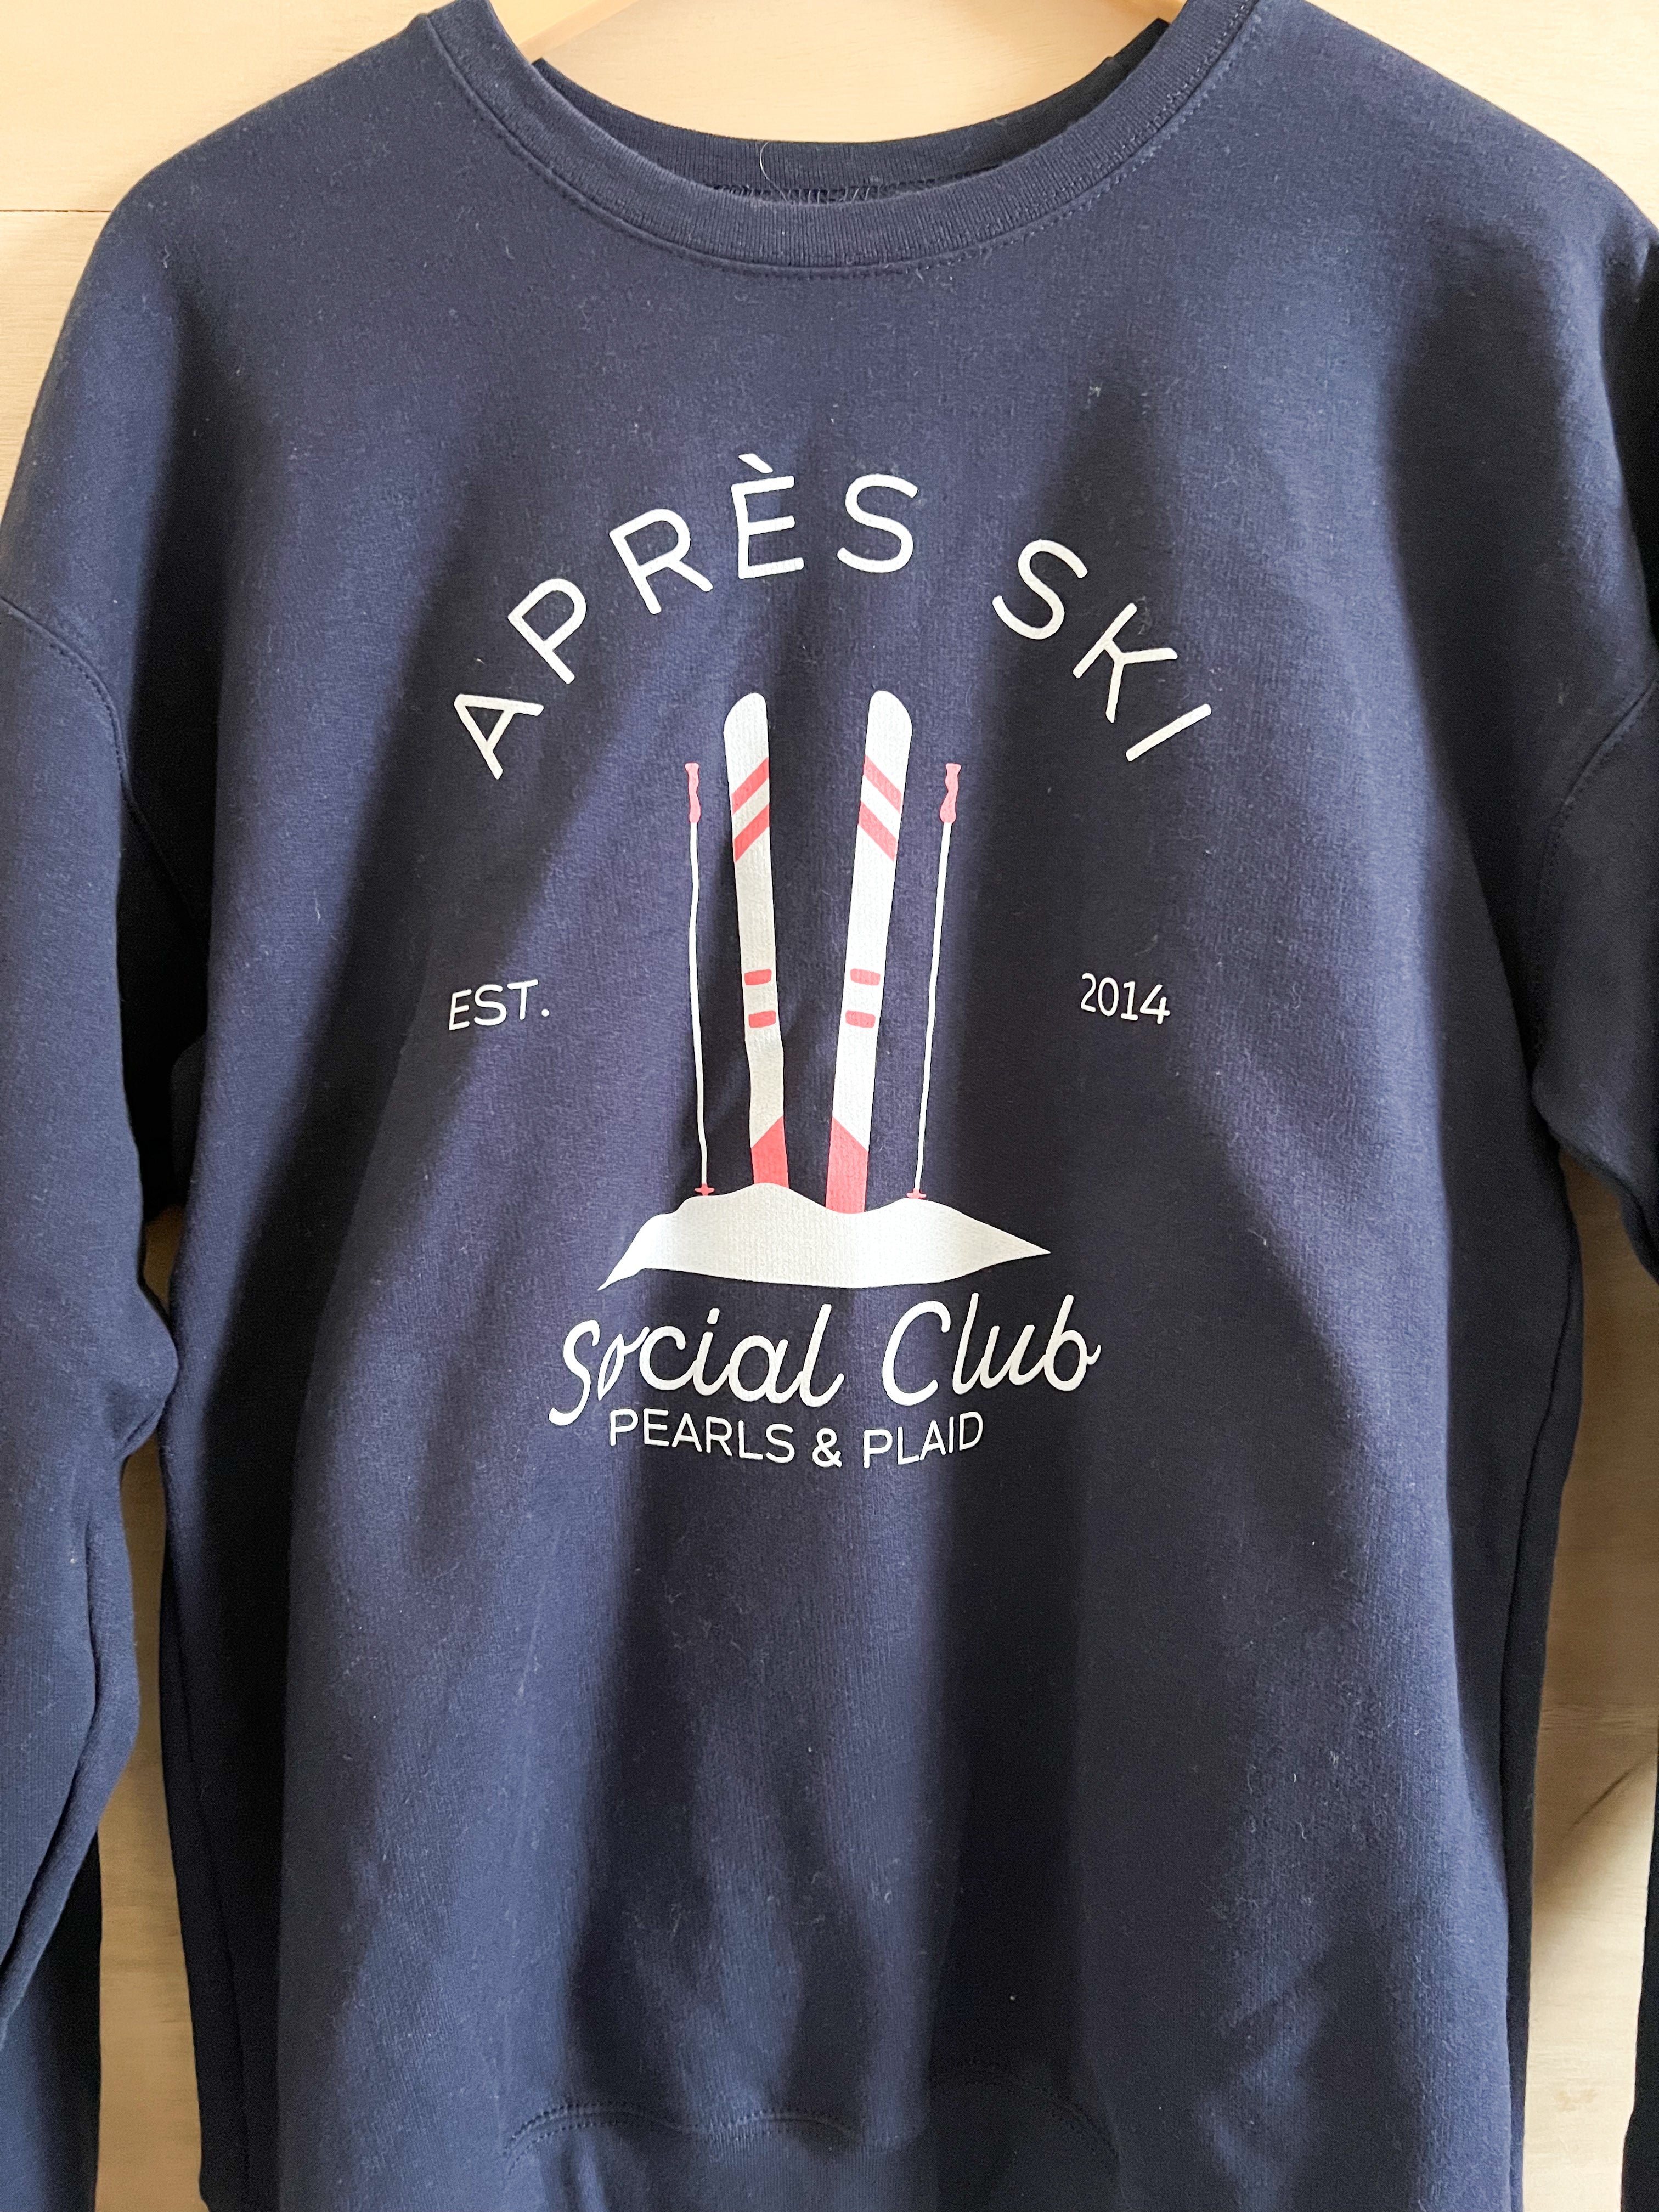 Navy crew neck sweatshirt, apres ski design printed on the front